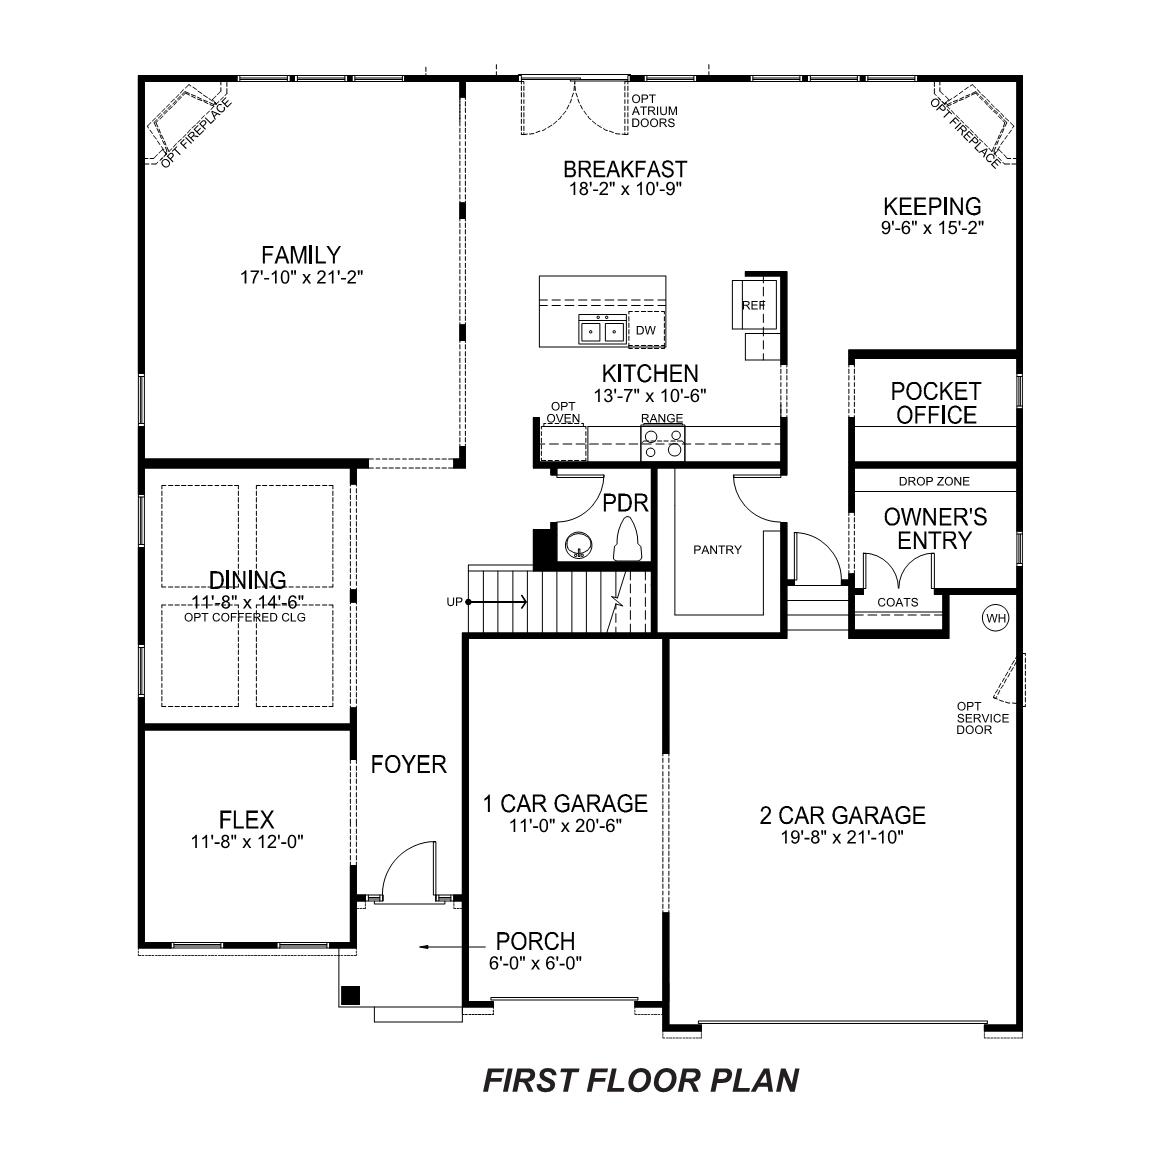 Jasmine first floor plan